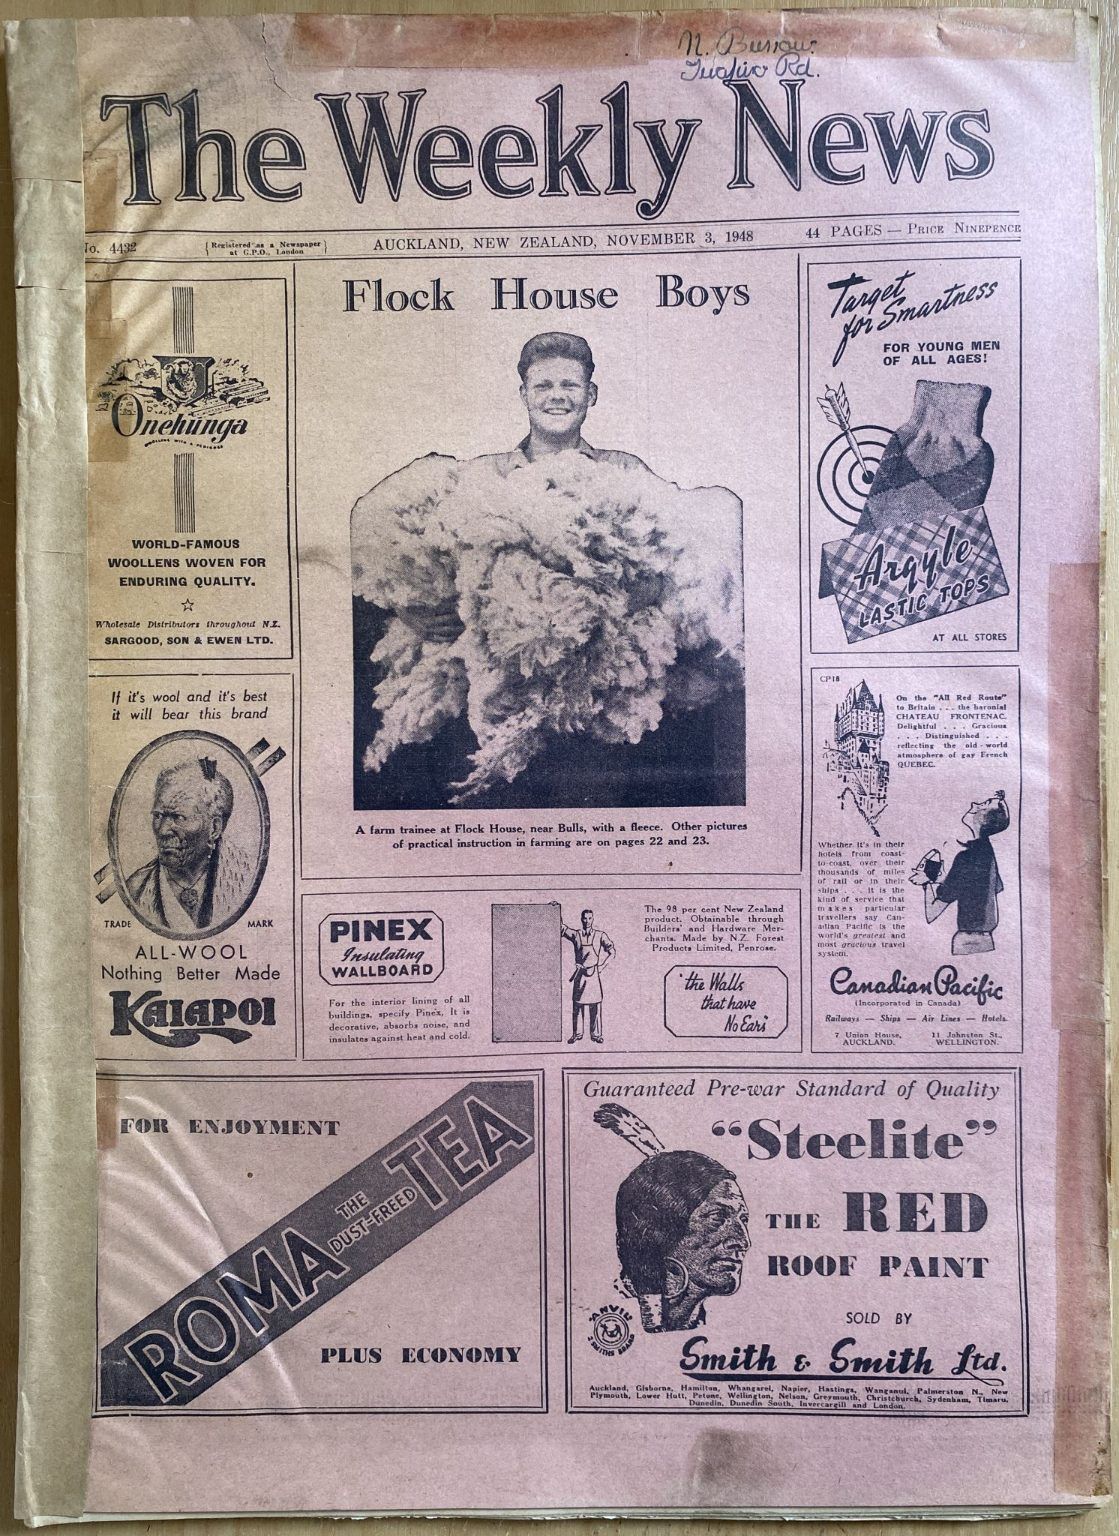 OLD NEWSPAPER: The Weekly News - No. 4432, 3 November 1948